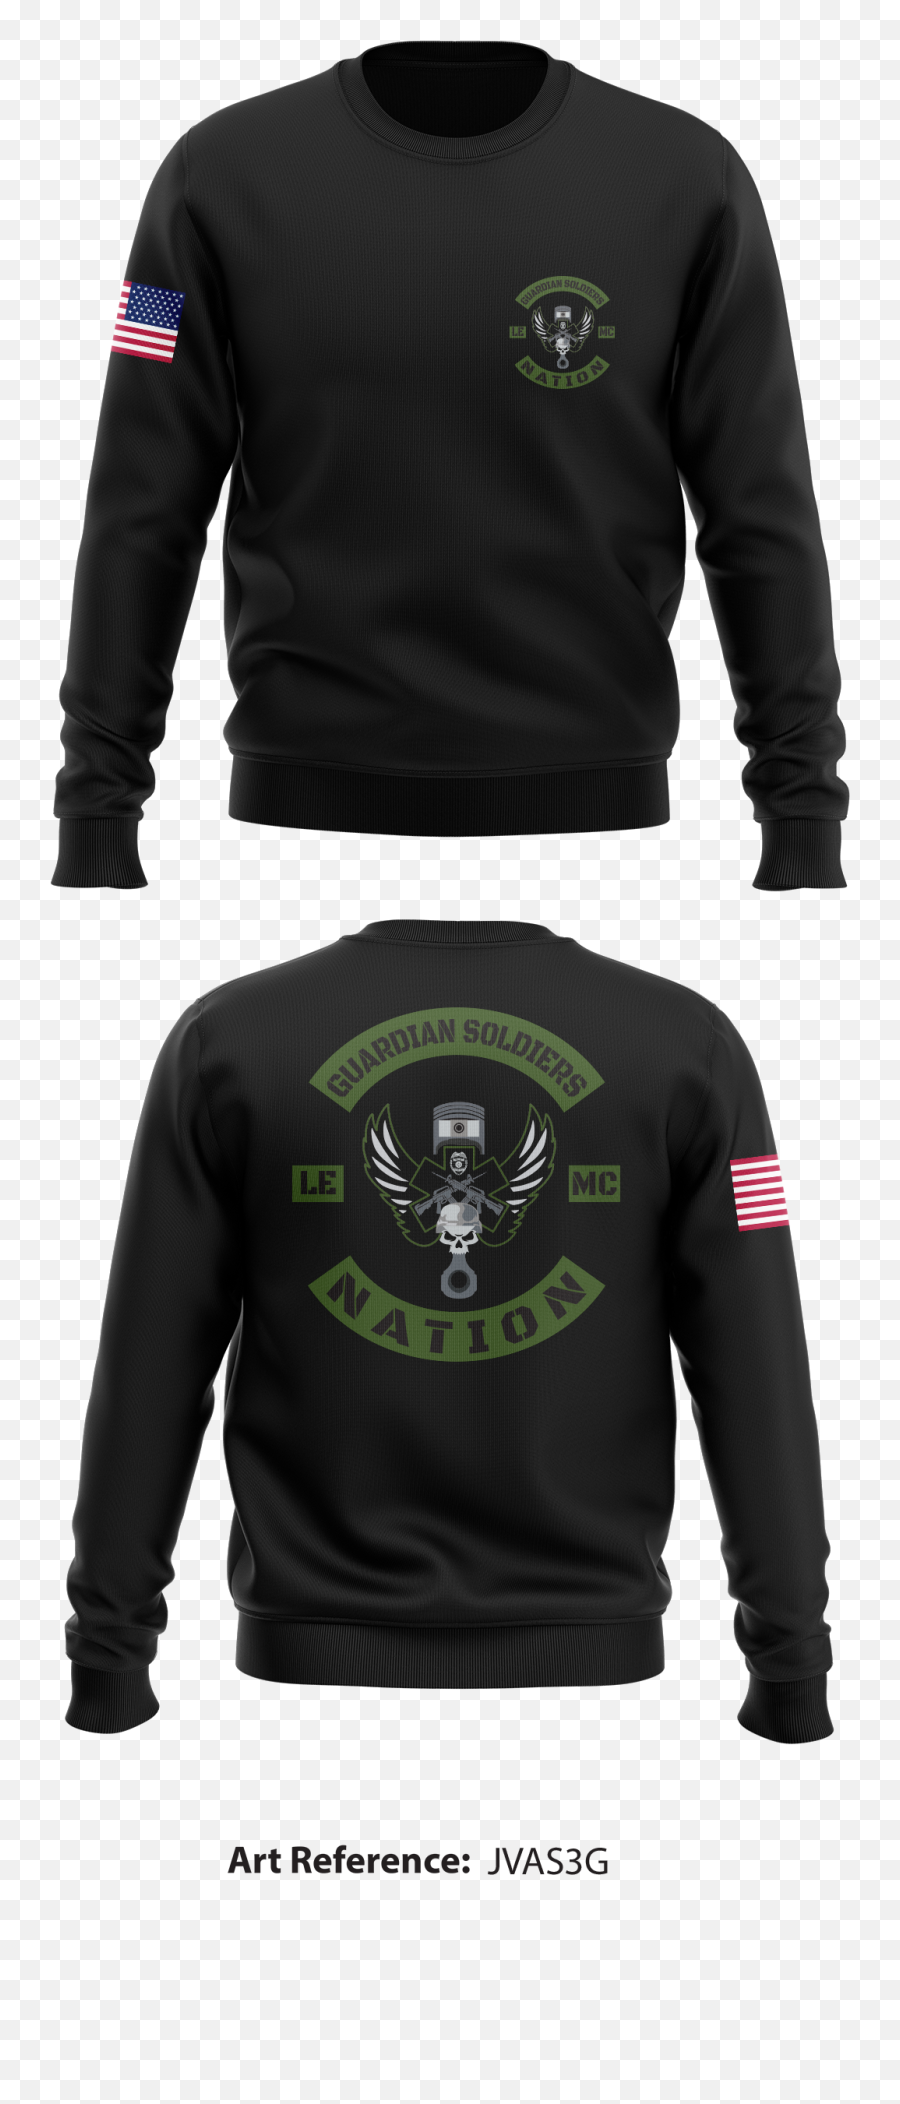 Guardian Soldiers Law Enforcement Motorcycle Club Store 1 Crew Neck Sweatshirt - Jvas3g Emoji,Lawn Enforcement Logo